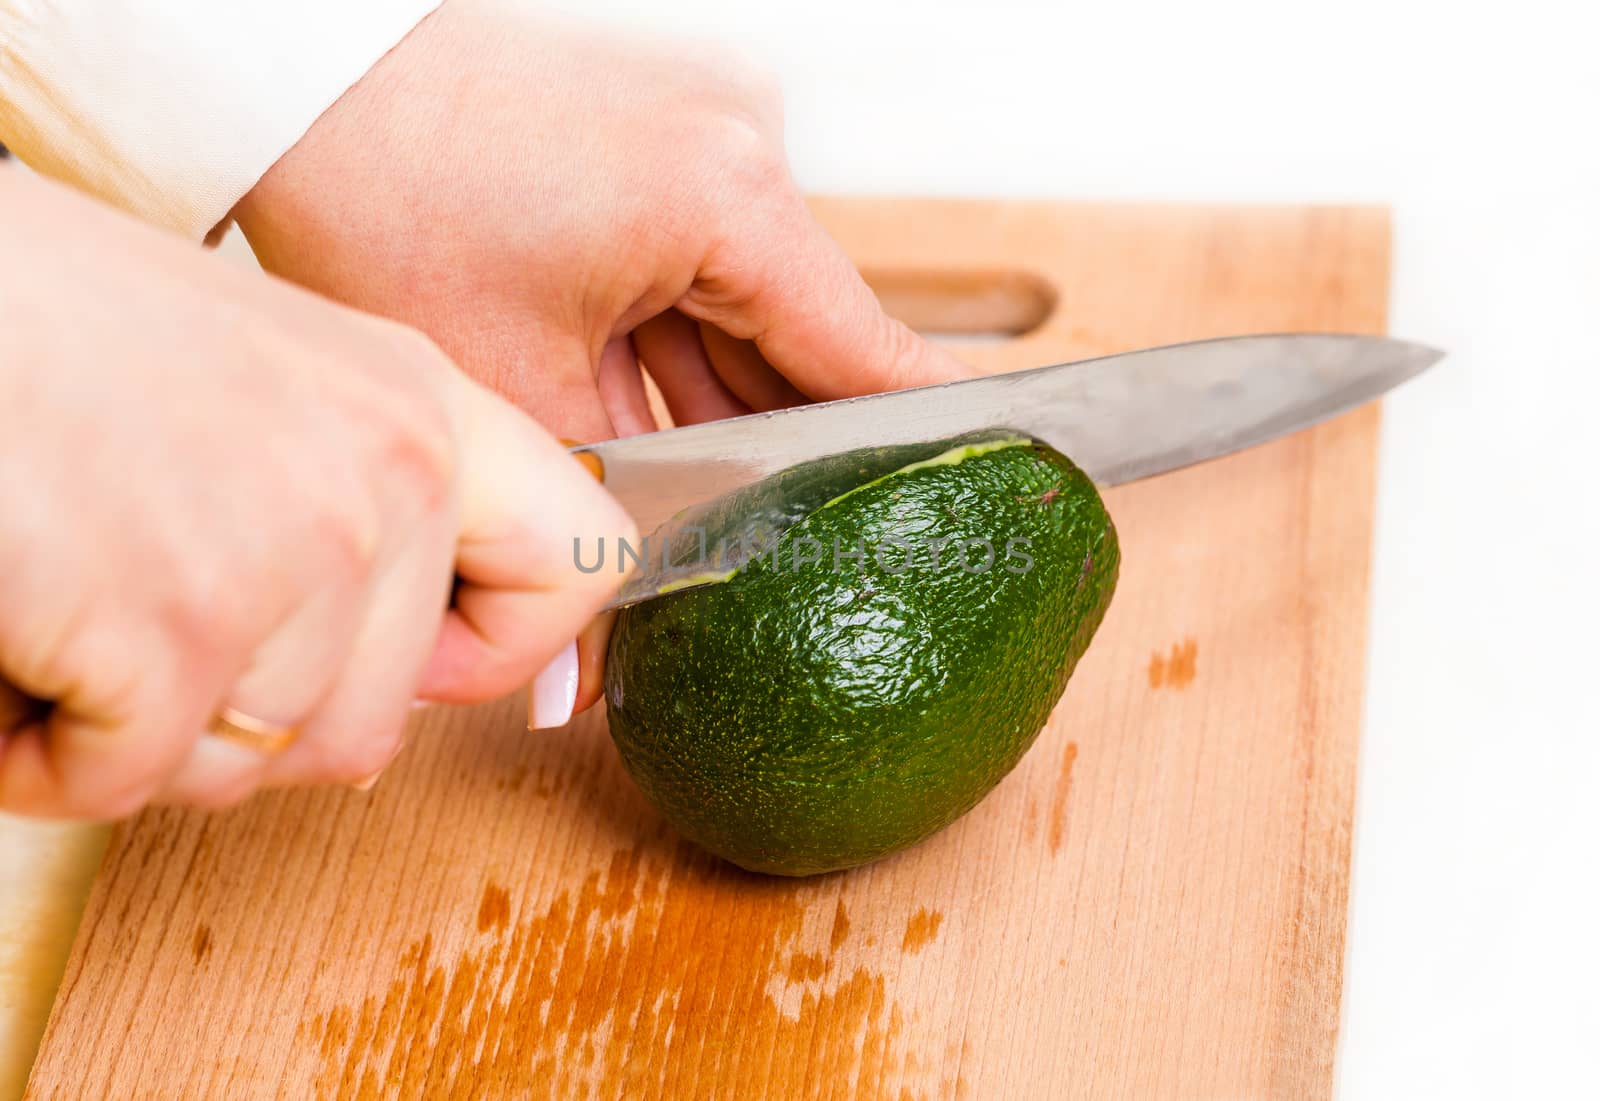 chef cuts the avocado closeup on a wooden board